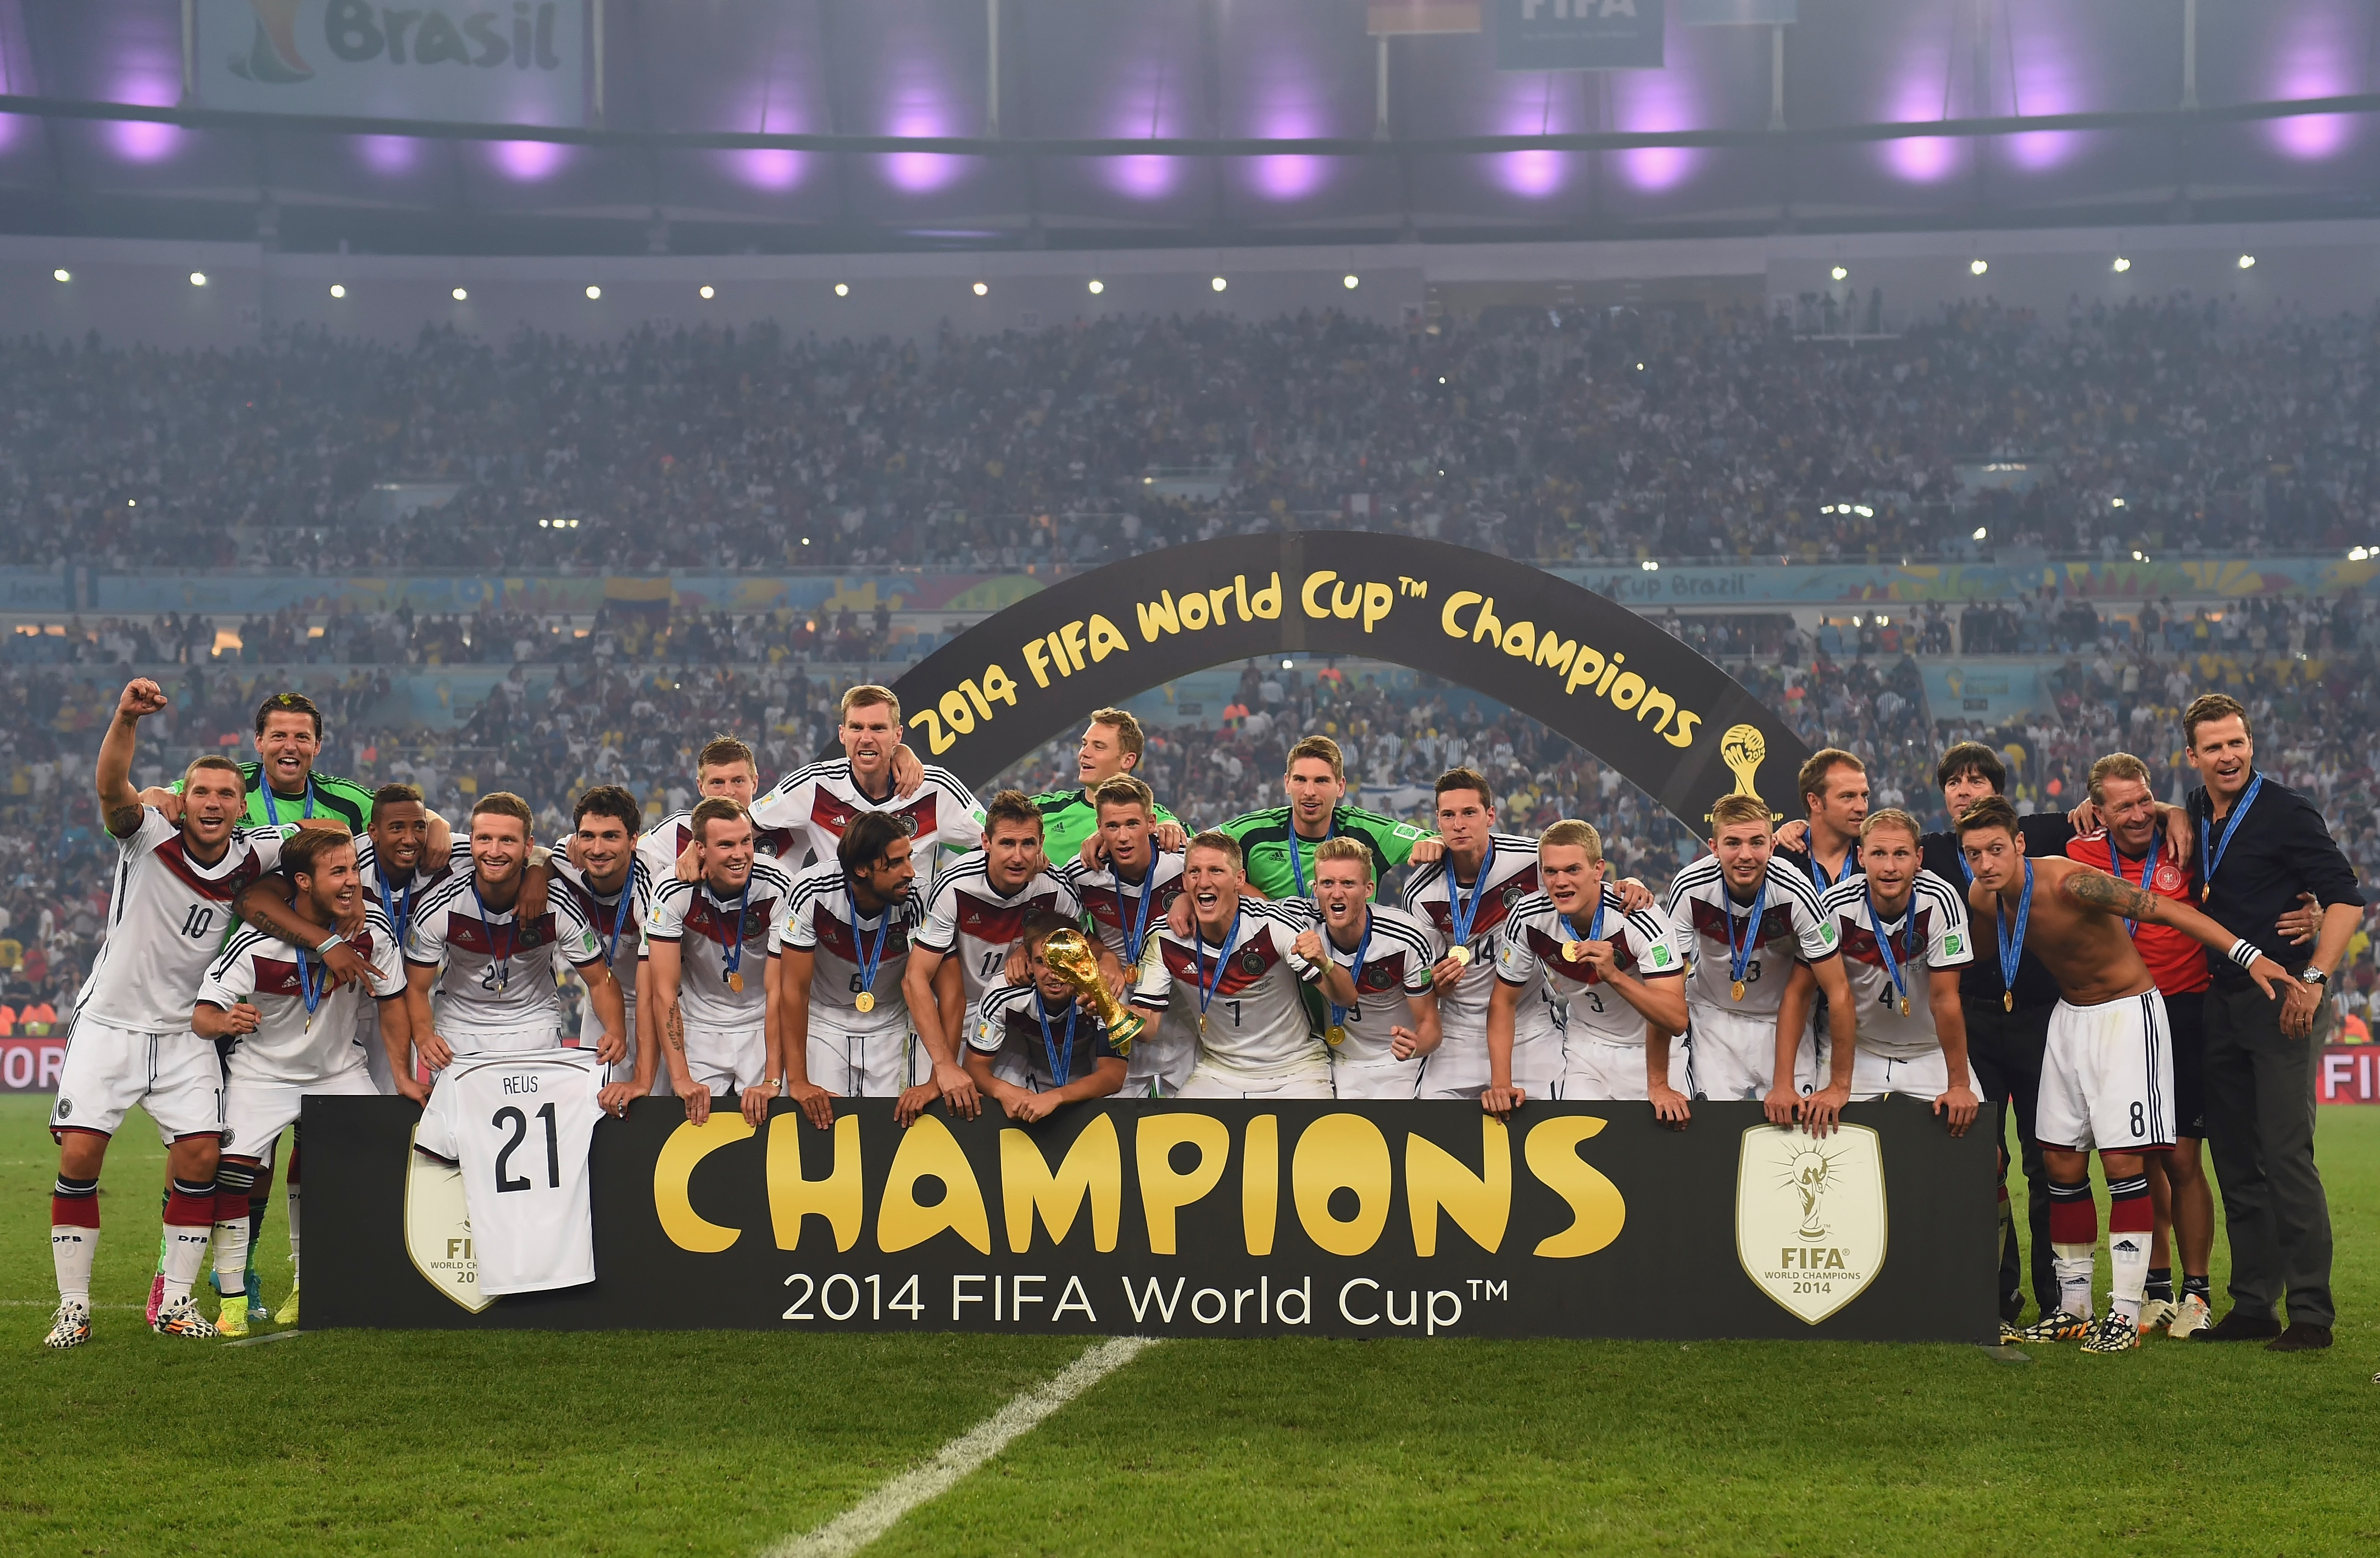 Germany World Champions 4k Ultra HD Wallpaper And